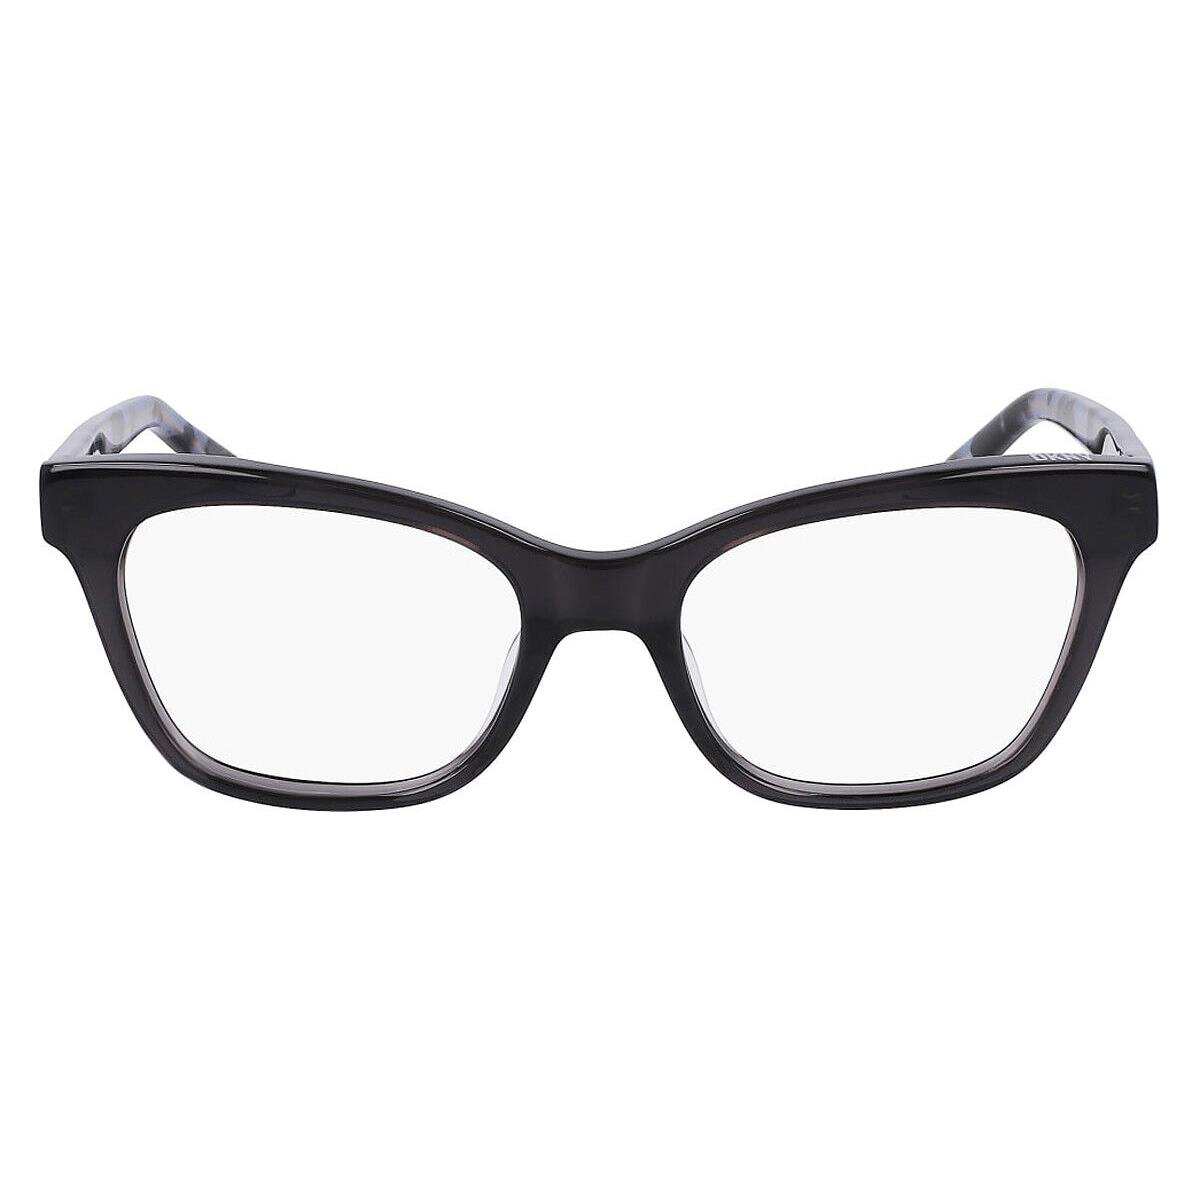 Dkny DK5053 Eyeglasses Women Crystal Carbon Cat Eye 51mm